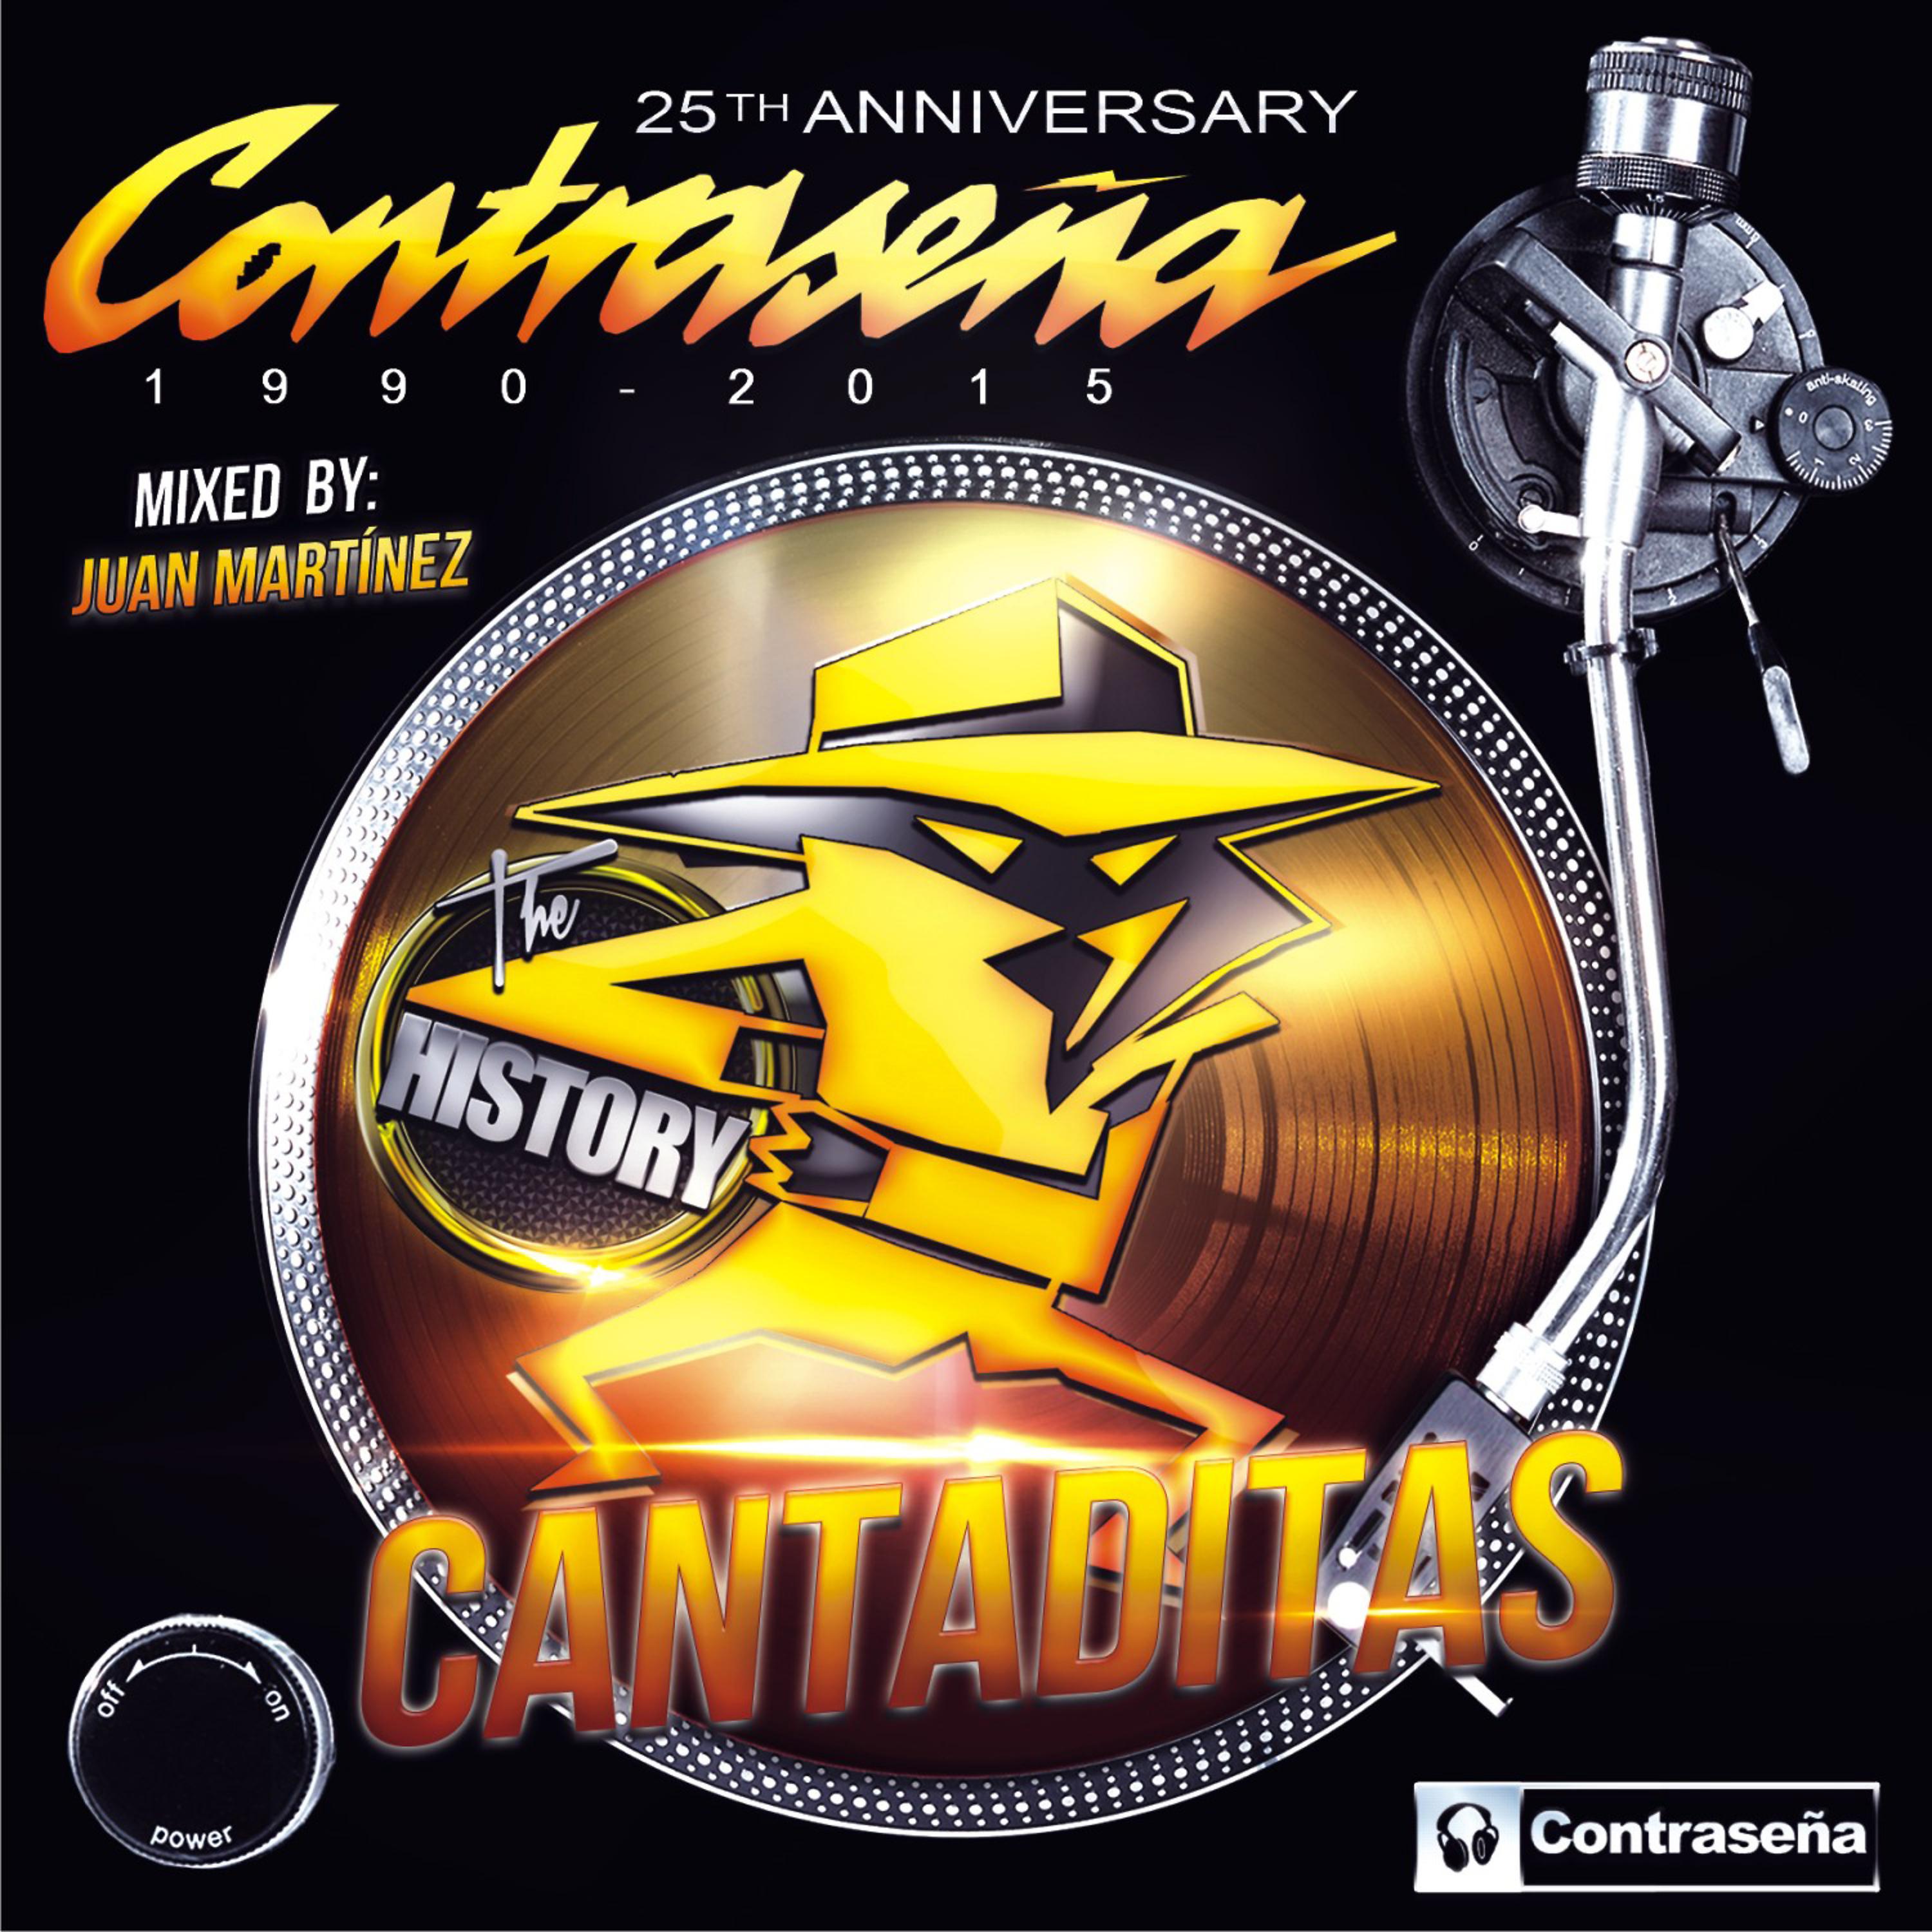 Постер альбома Contraseña "The History" Cantaditas 25th Anniversary 1990 - 2015